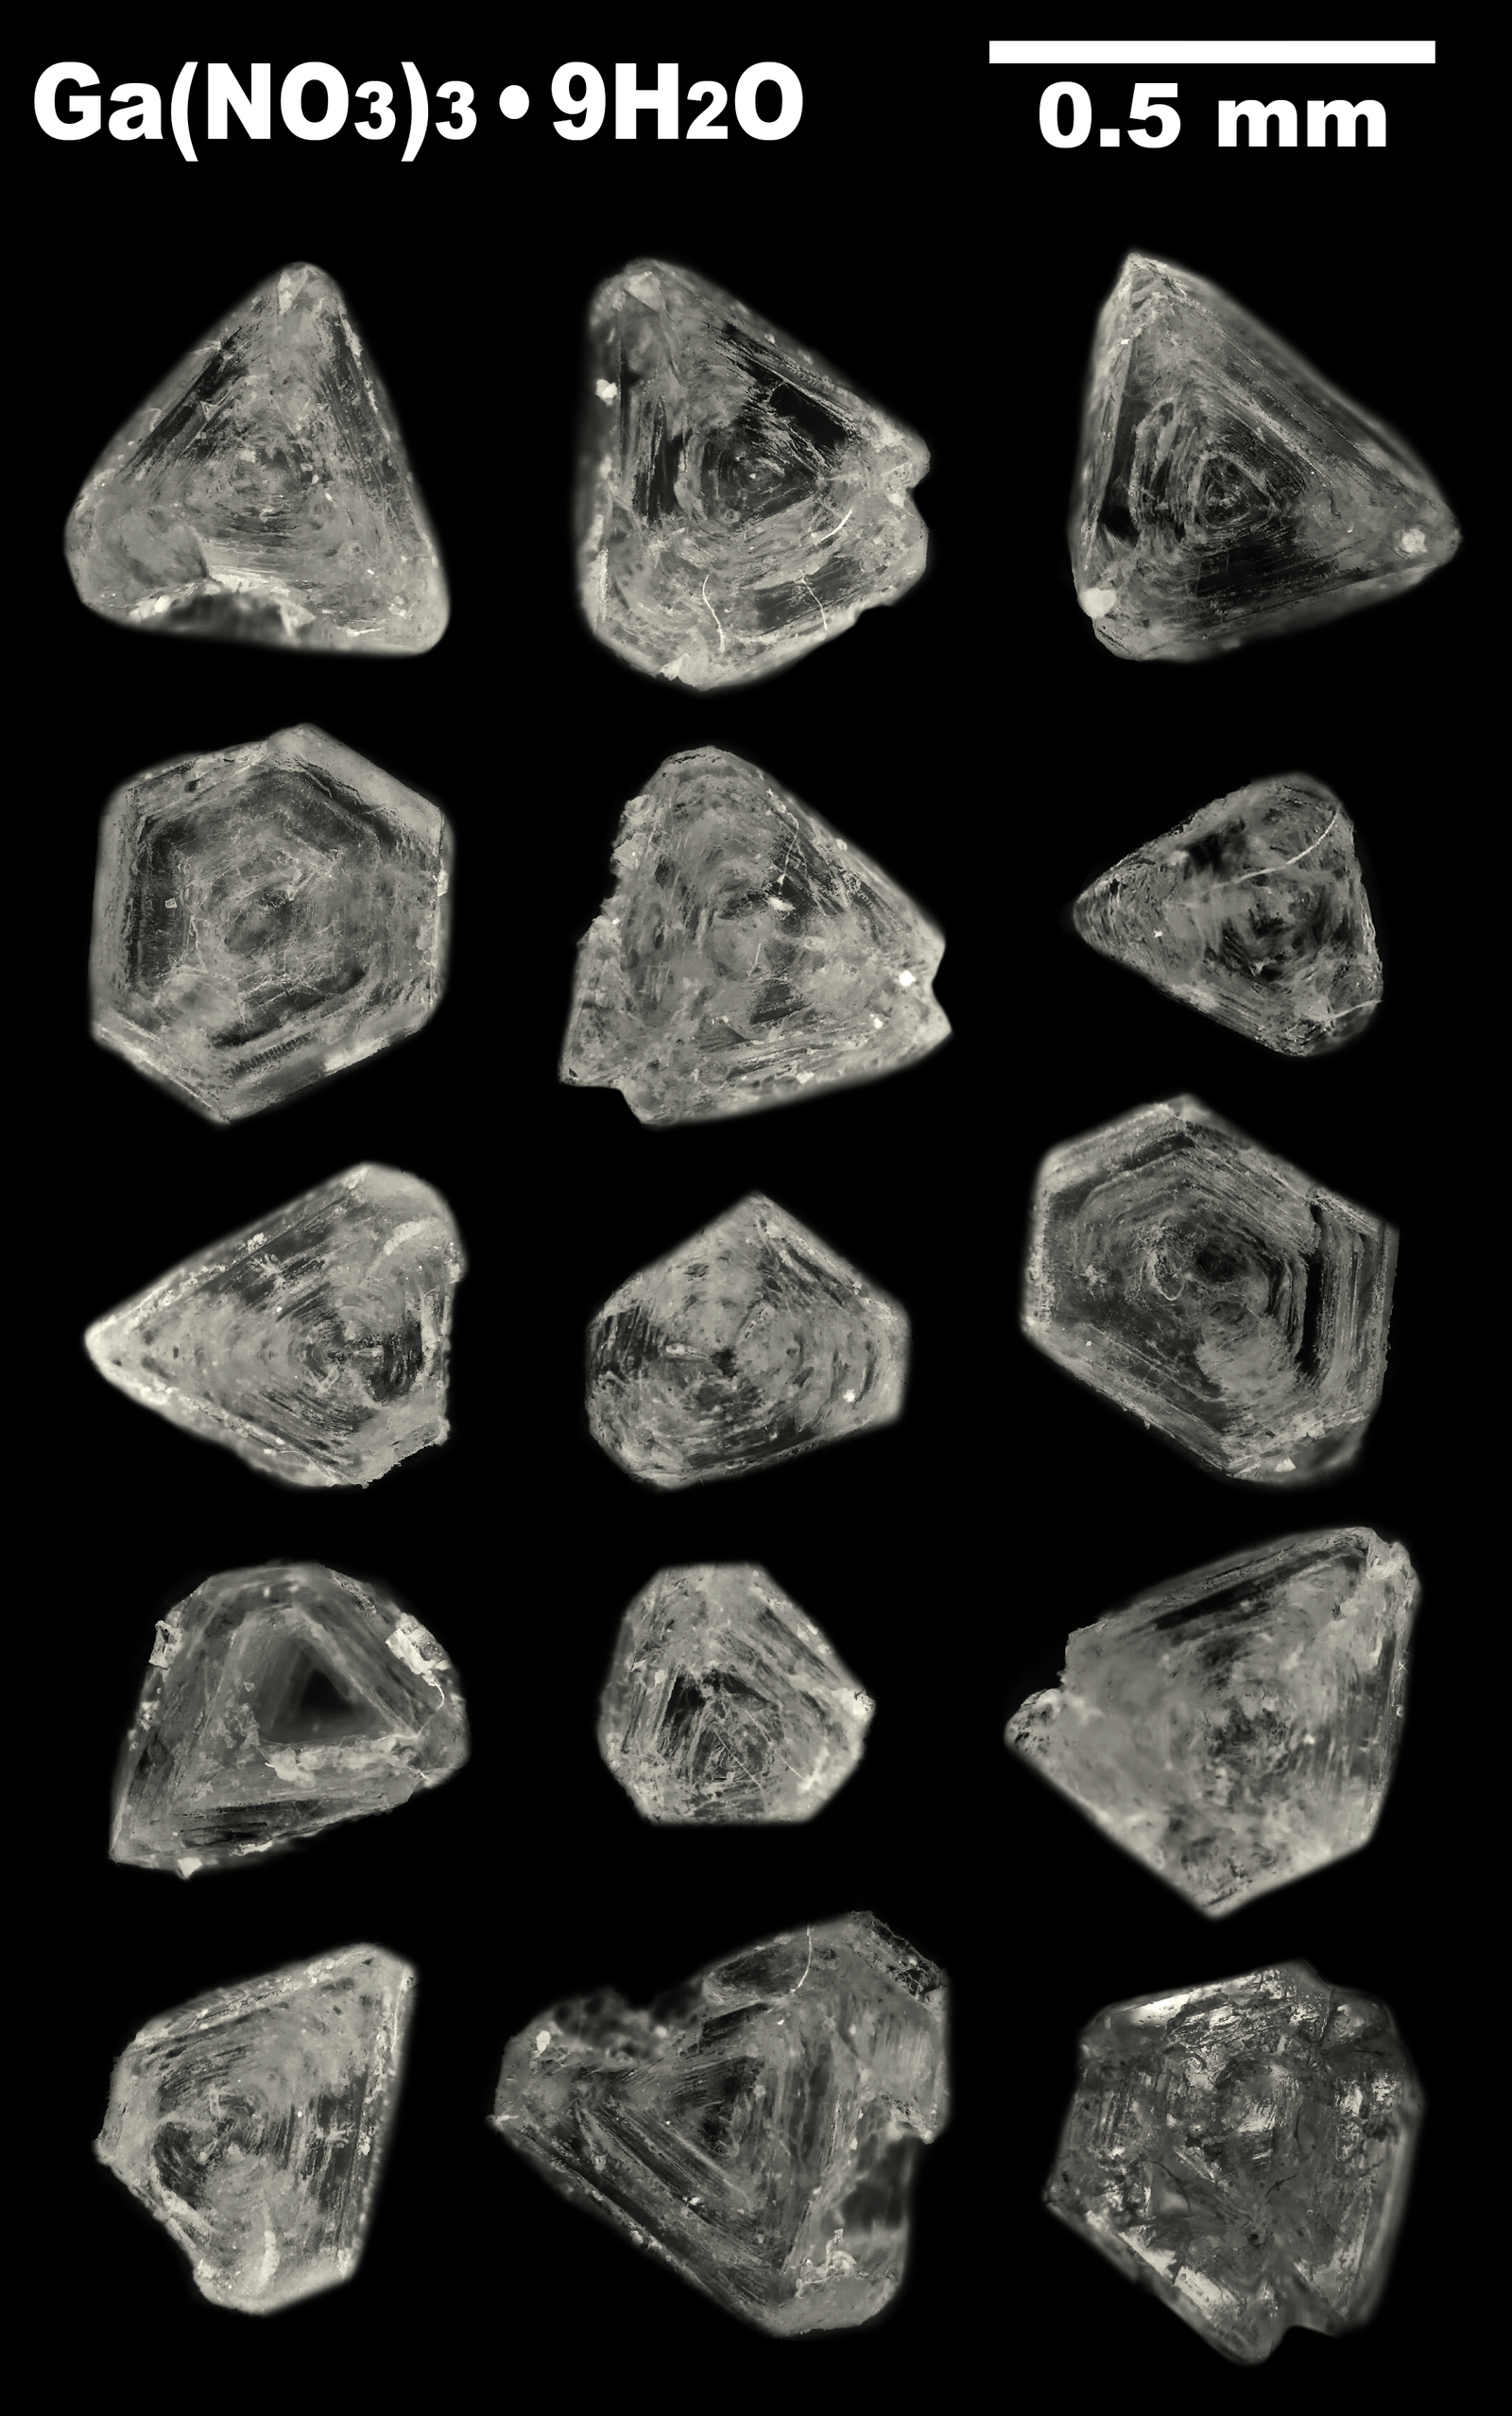 Gallium nitrate crystals - My, Chemistry, Crystals, The photo, Microscope, Gallium